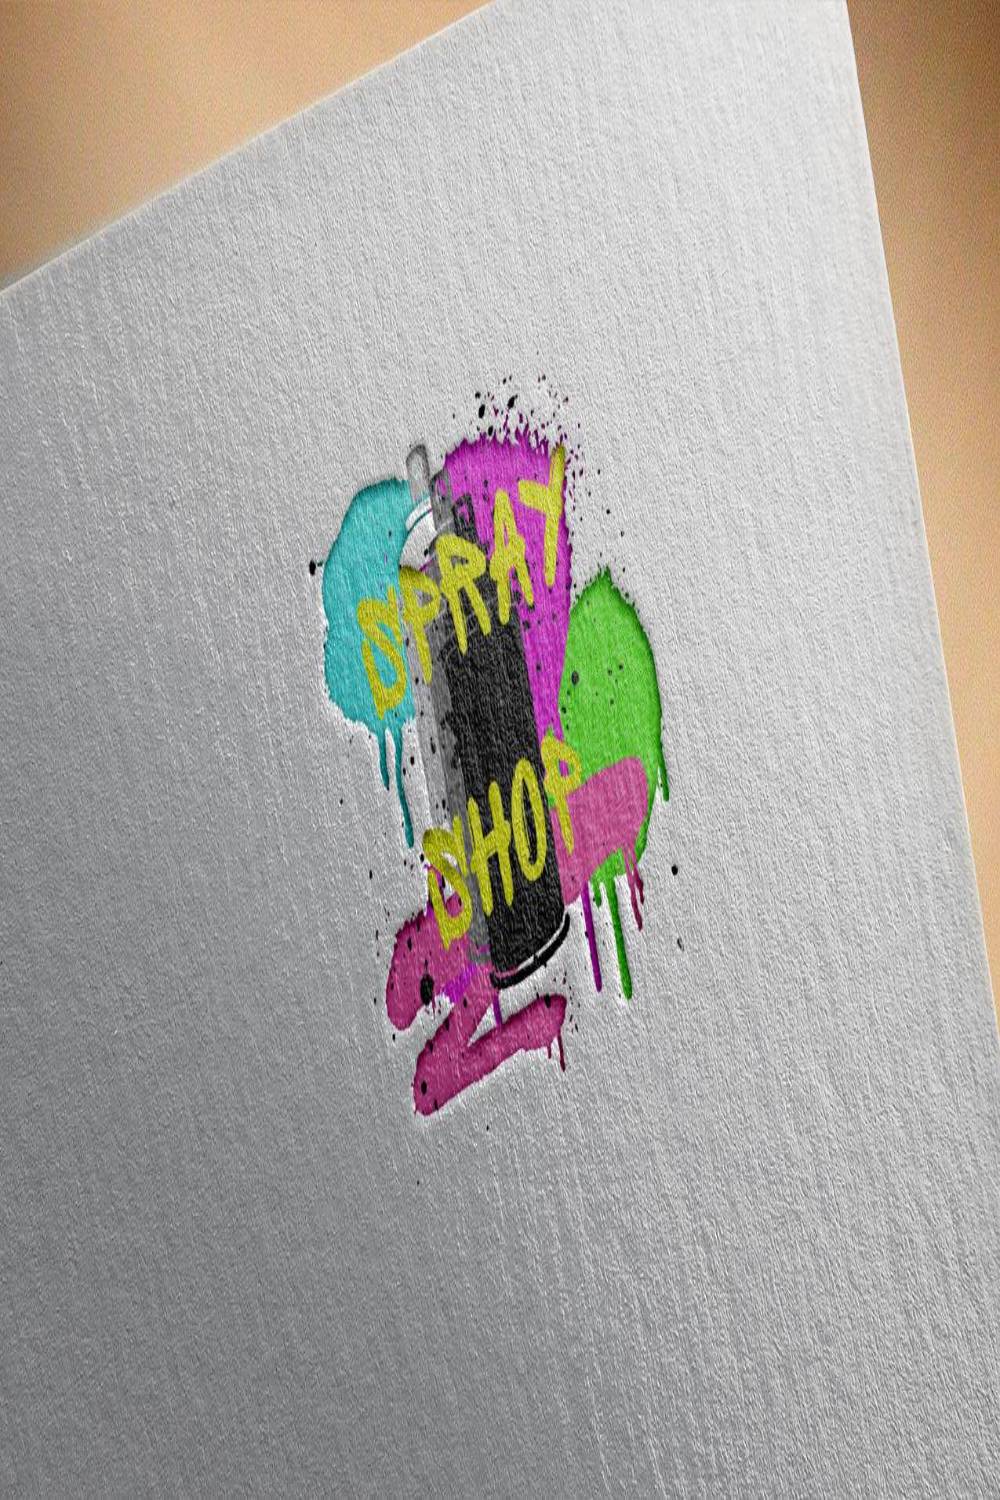 Spray Shop Logo Design pinterest image.